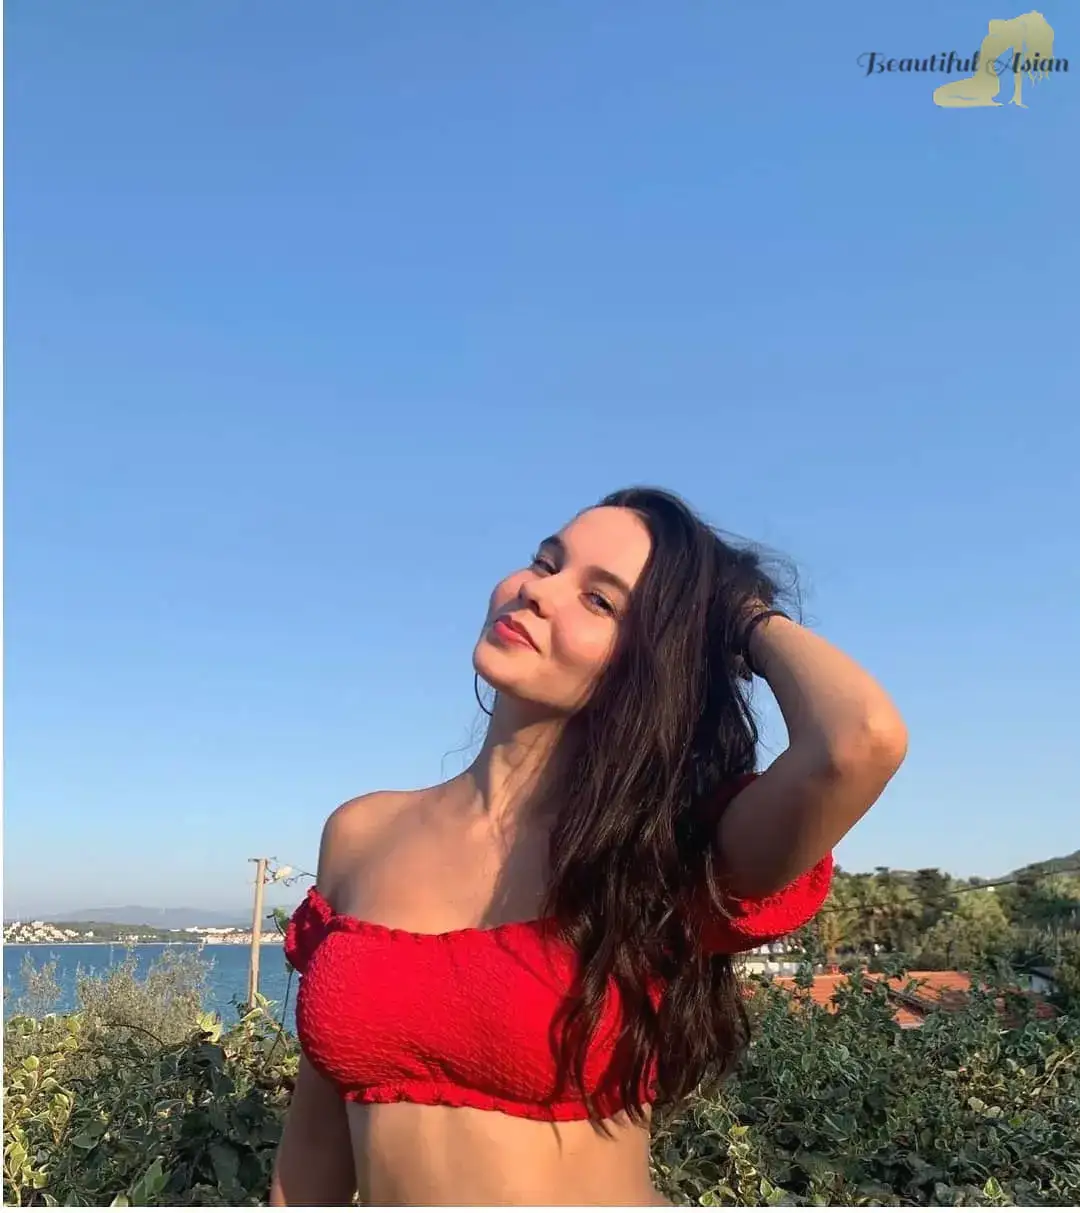 radiant Turkish girl image